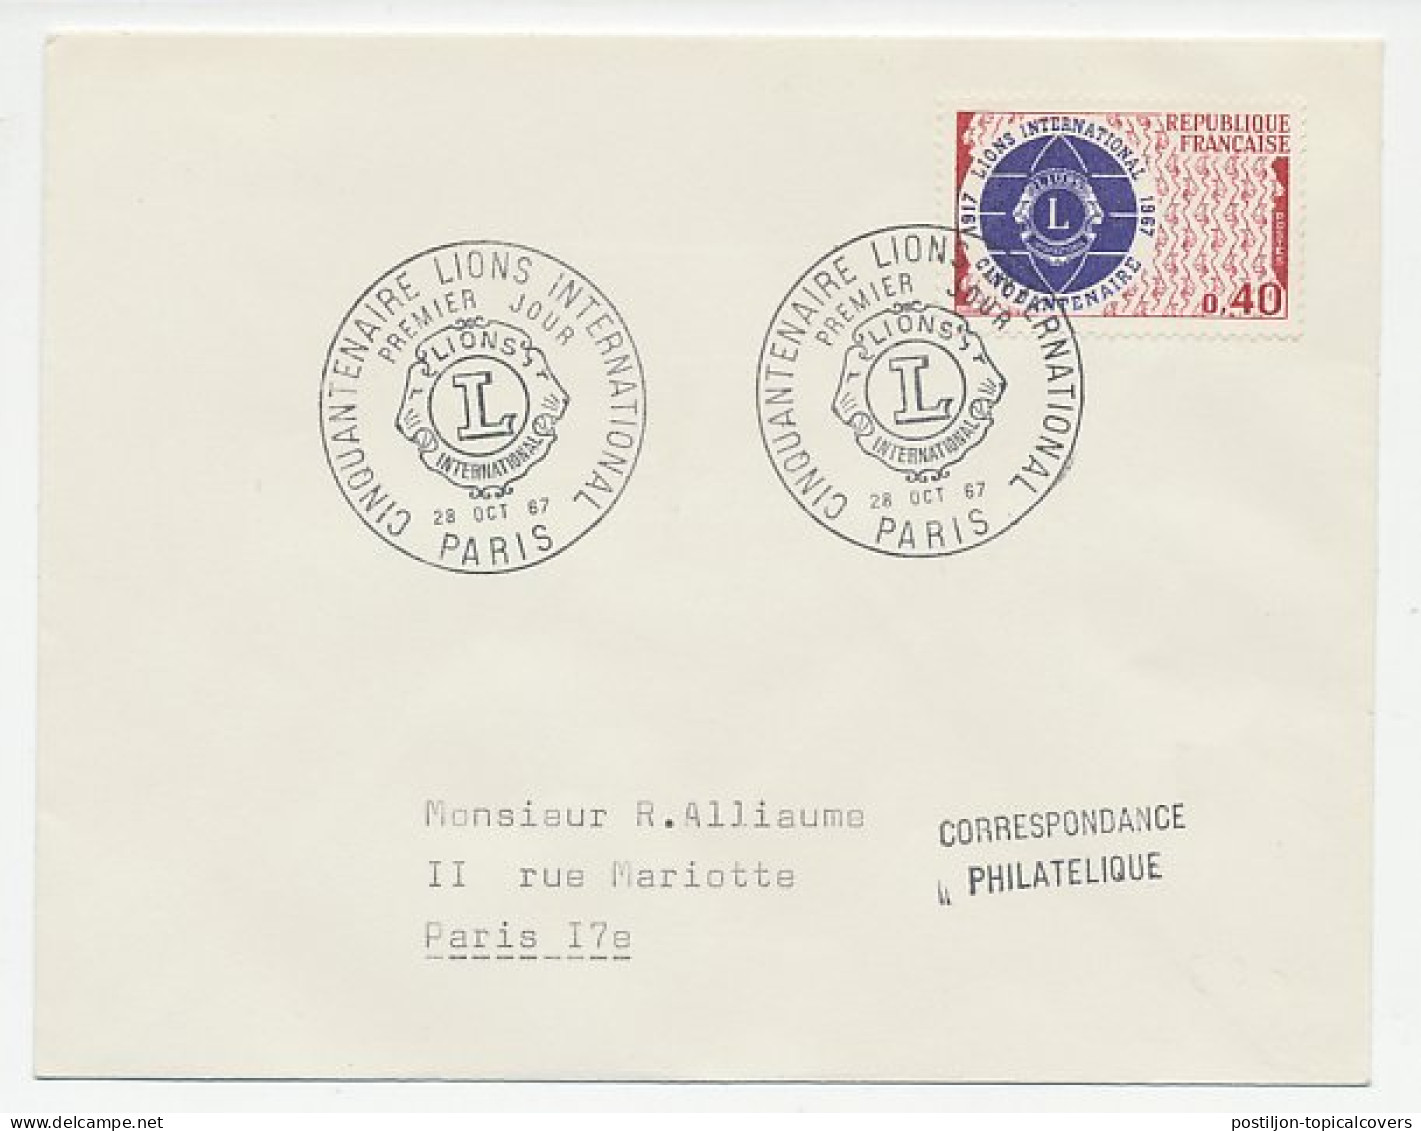 Cover / Postmark France 1967 Lions International - Rotary, Lions Club